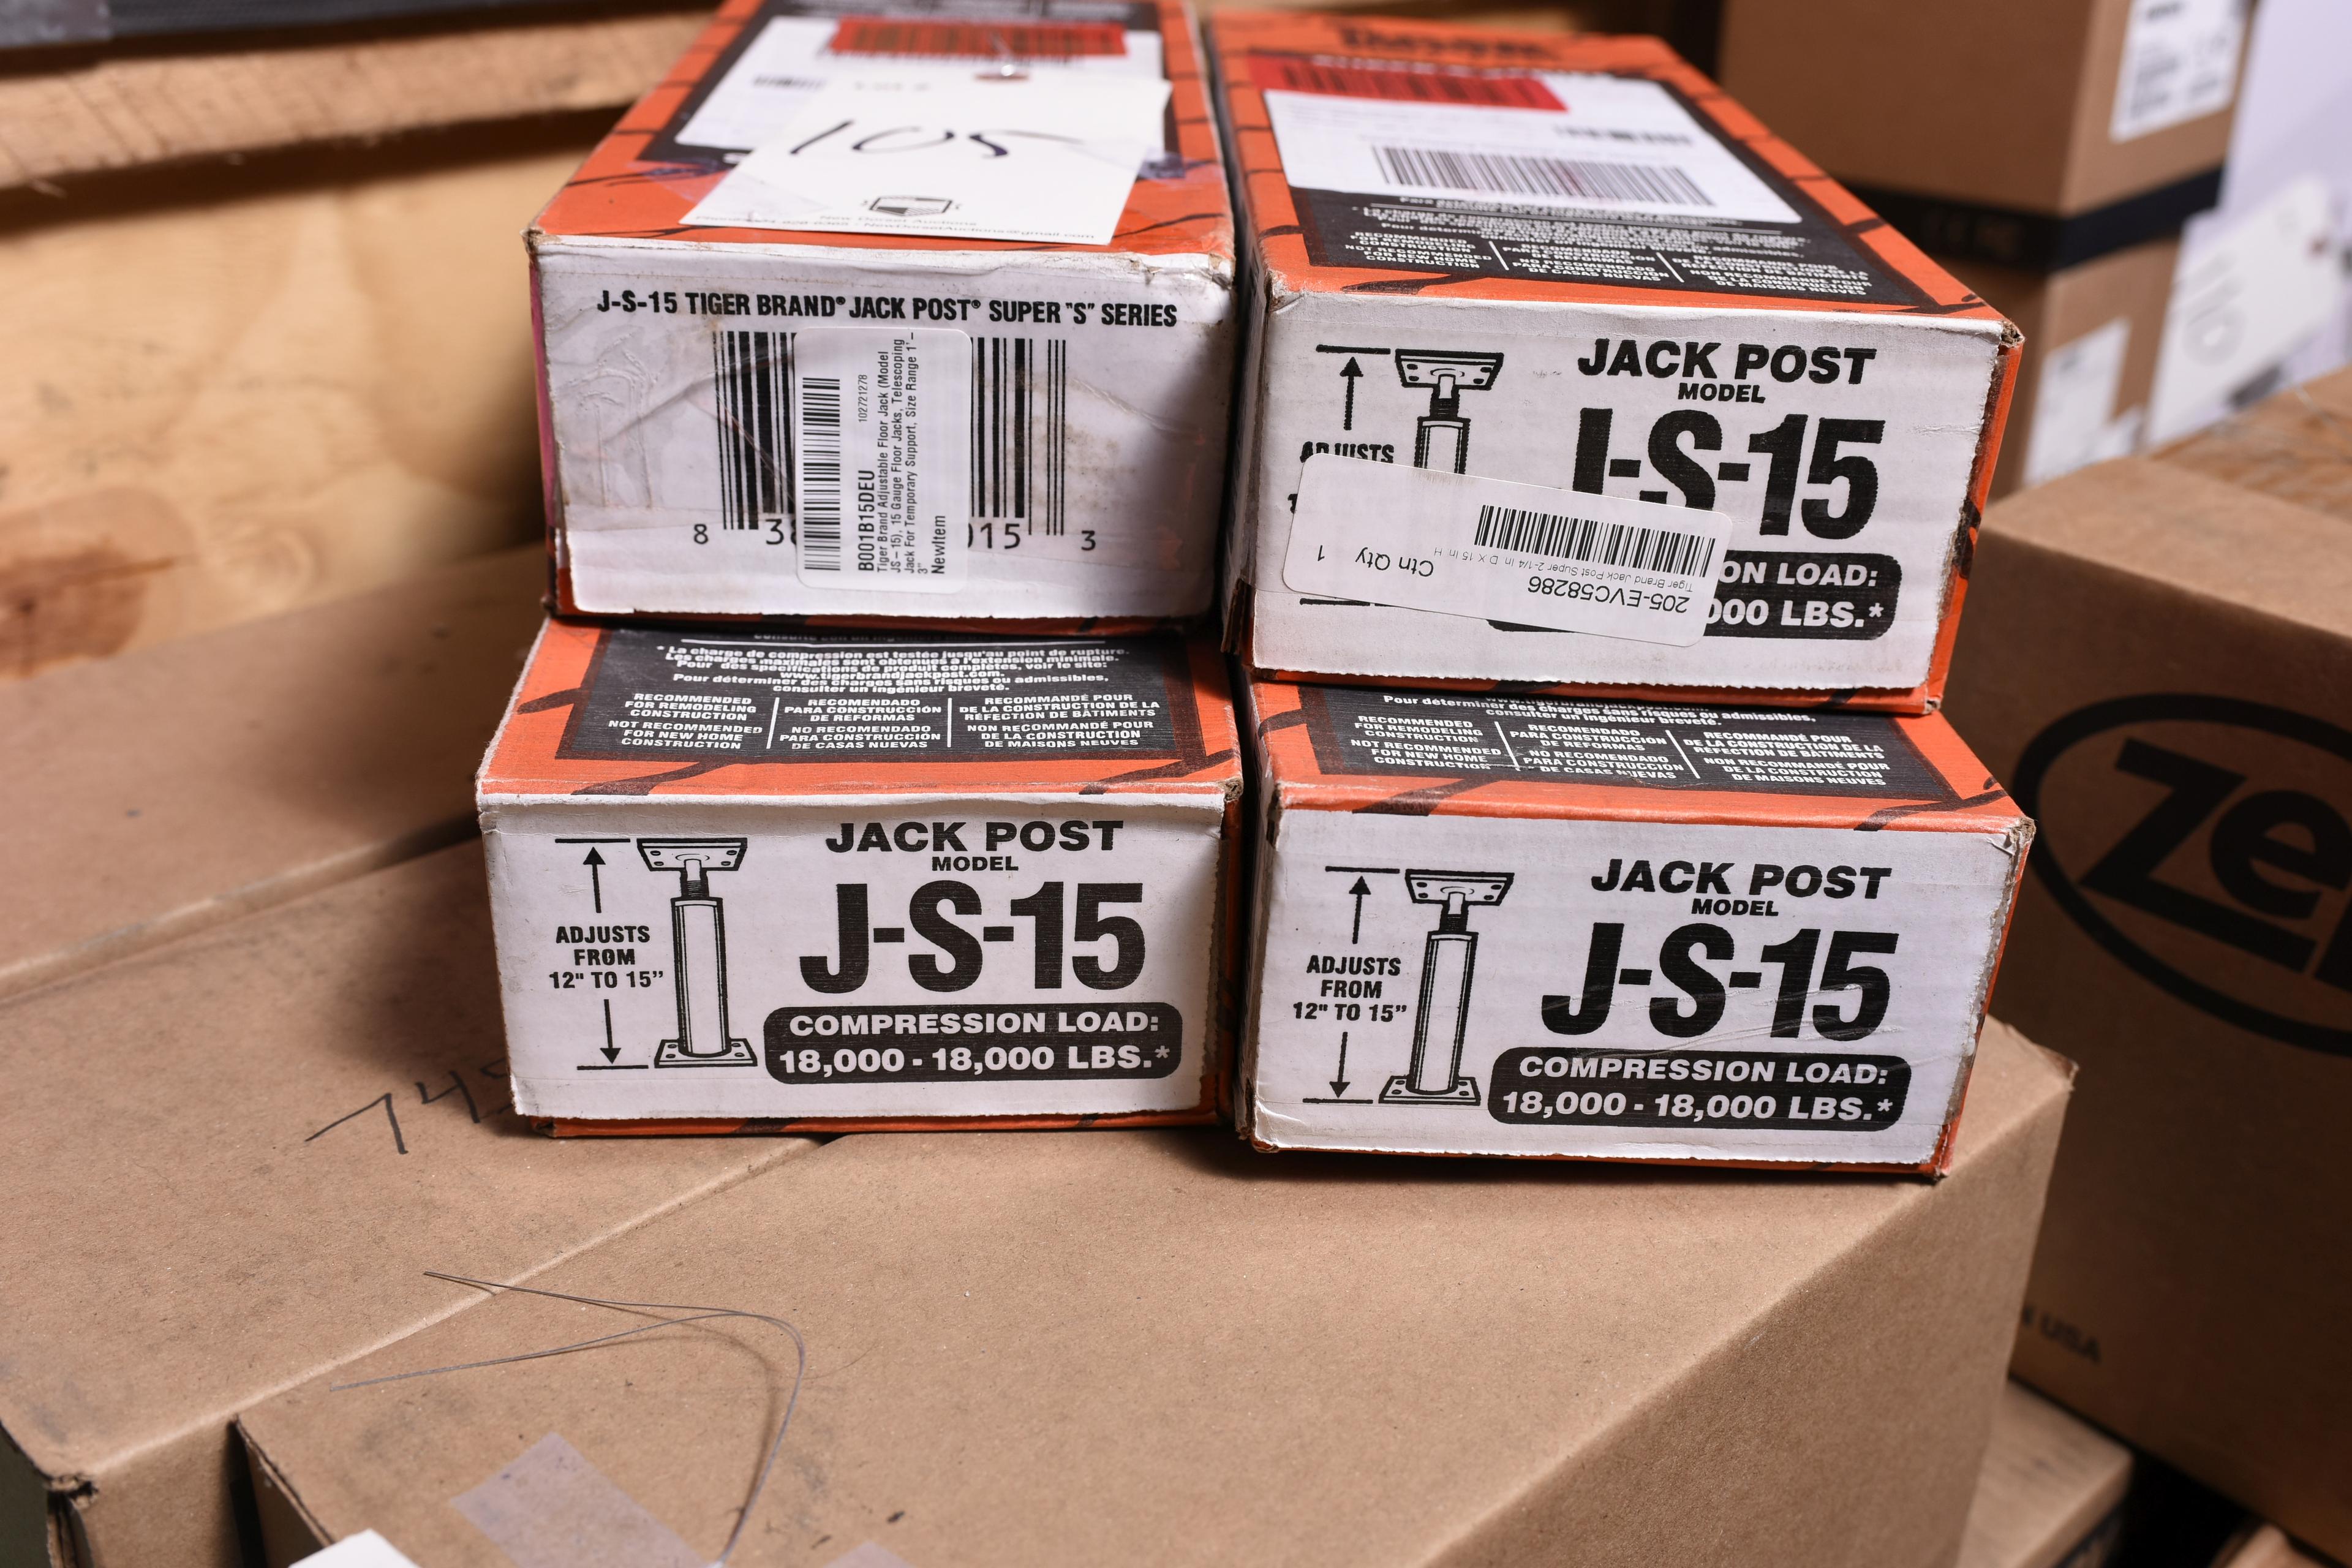 Tiger Brand Jack Post J-S-15